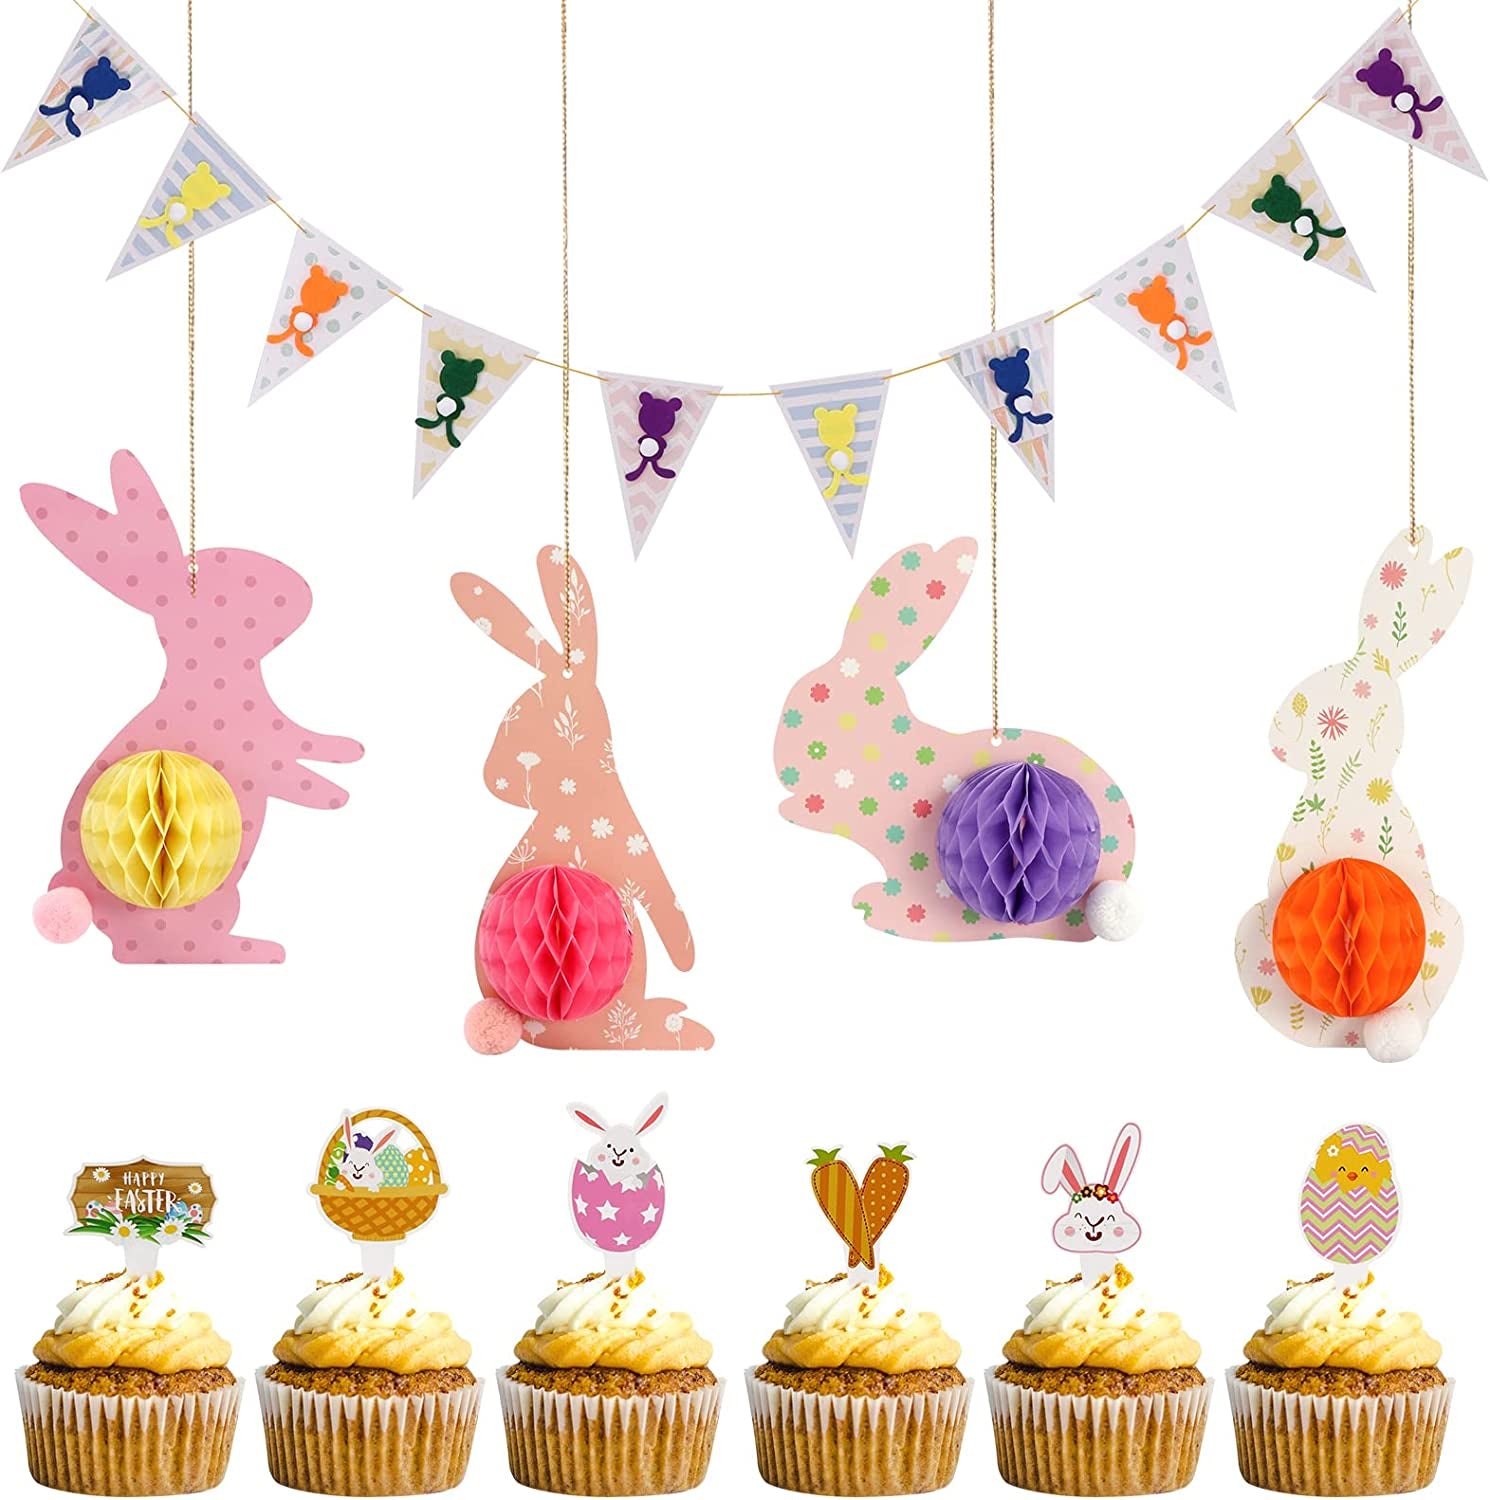 48PCS Colorful Hanging Bunny Decorations